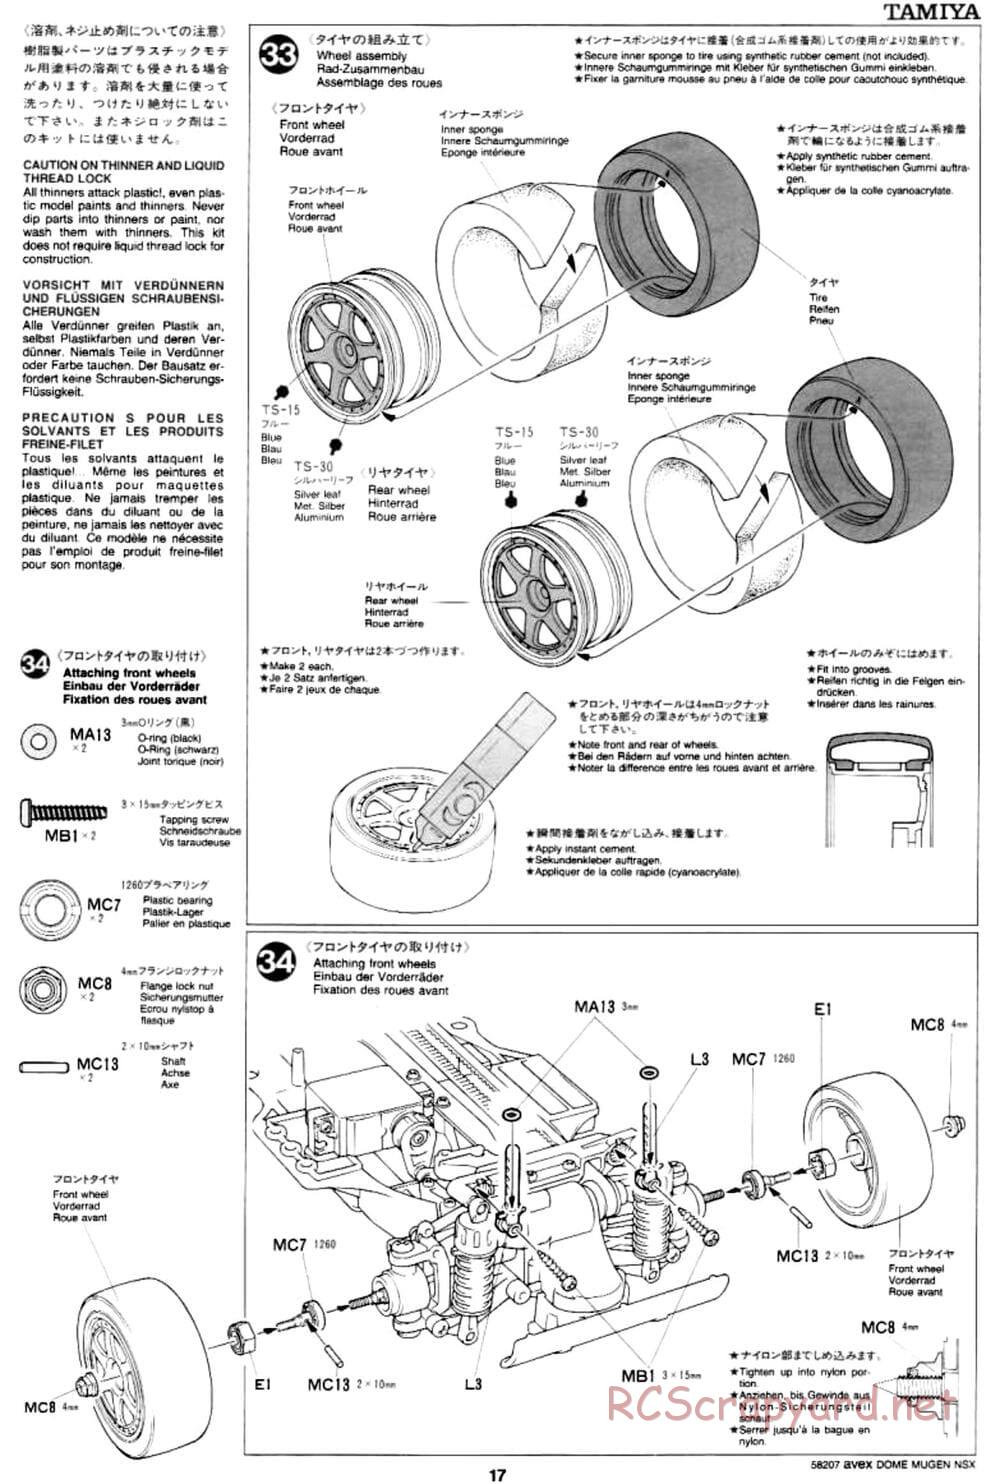 Tamiya - Avex Dome Mugen NSX - TA-03R Chassis - Manual - Page 17